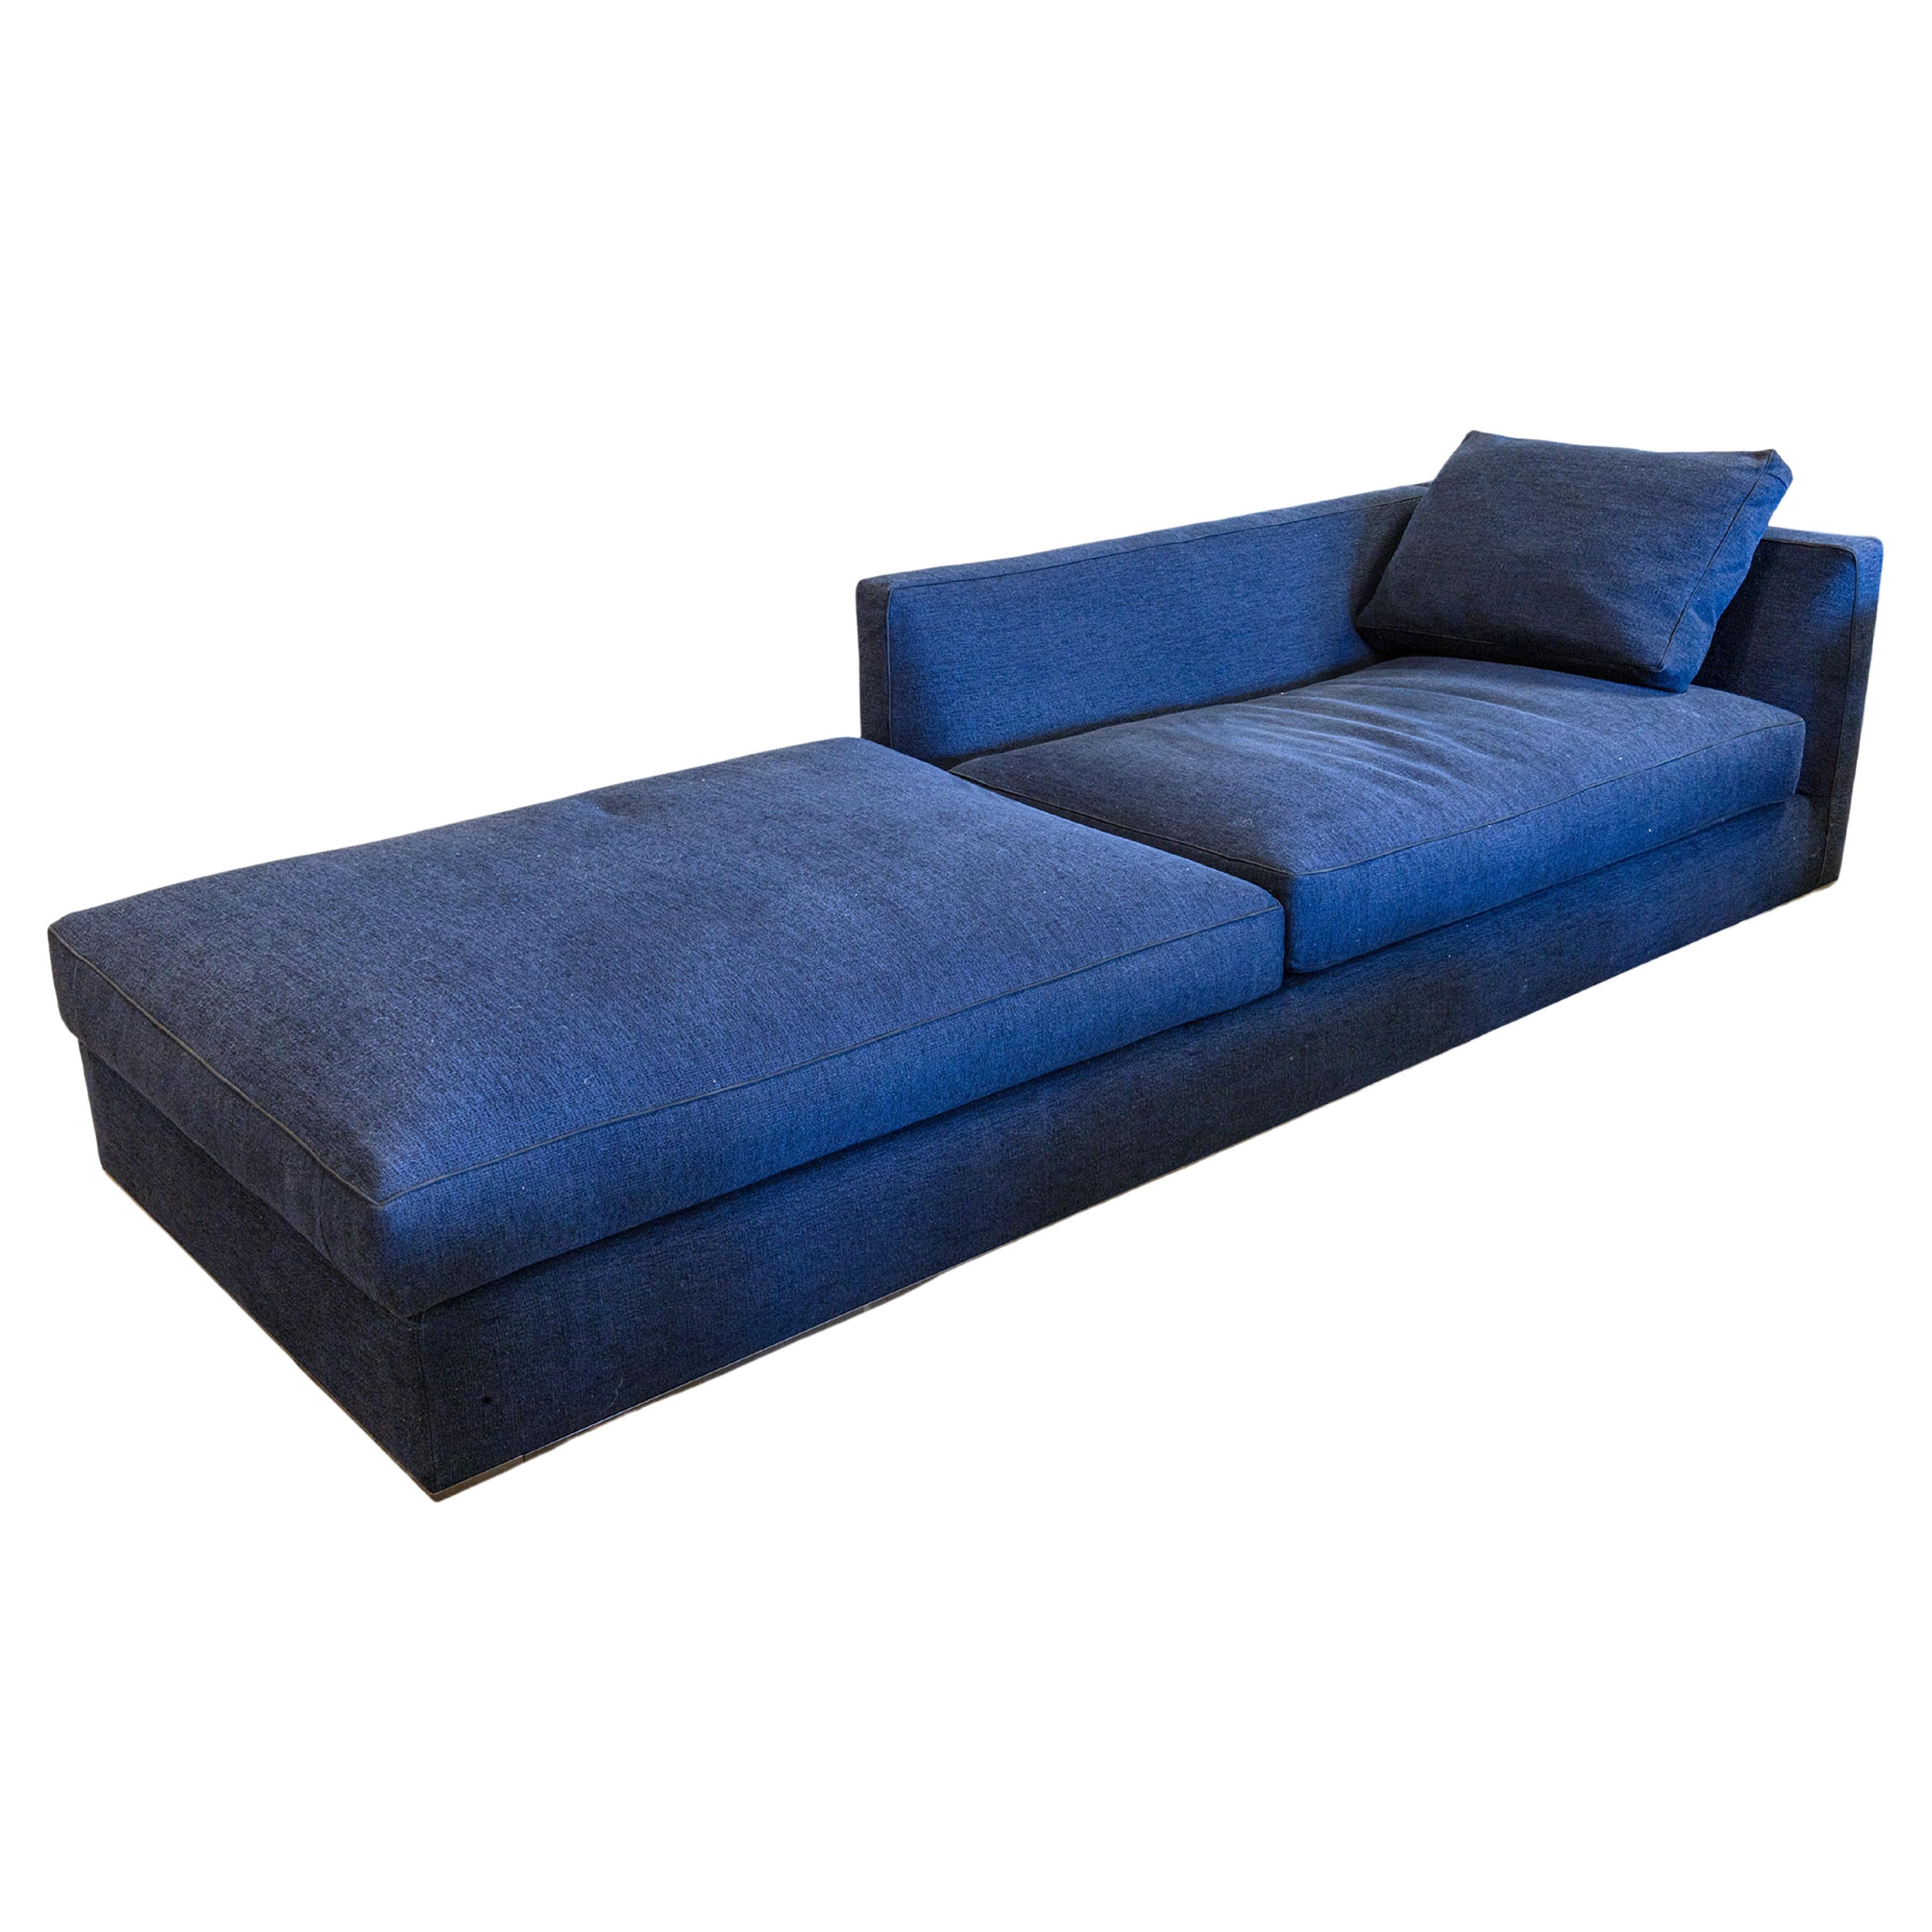 B & B Italia Antonio Citterio Richard Chaise Lounge Sofa in Blau mit S-Stoff-Stoff in Blau